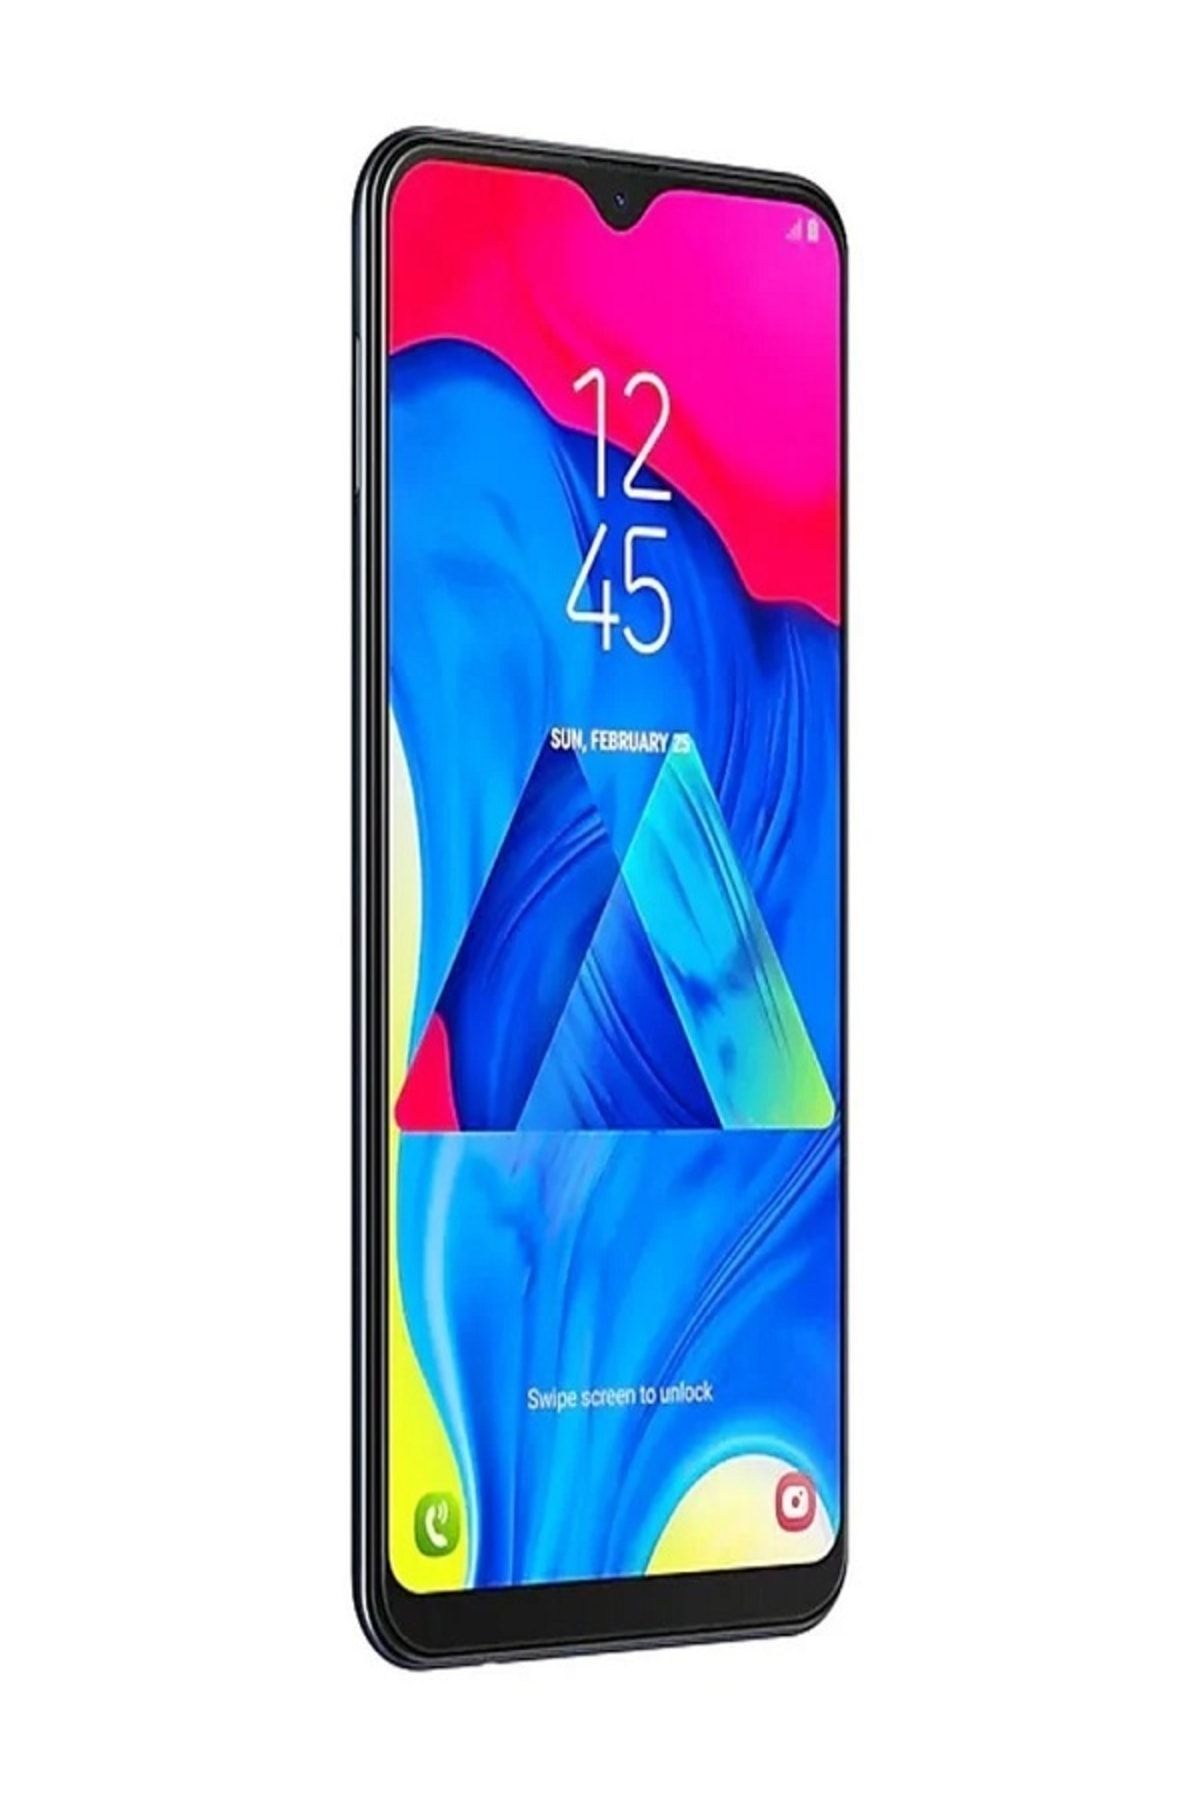 Samsung Galaxy M10 16gb Siyah Yenilenmiş Cep Telefonu (12 AY RİTZY GARANTİLİ)